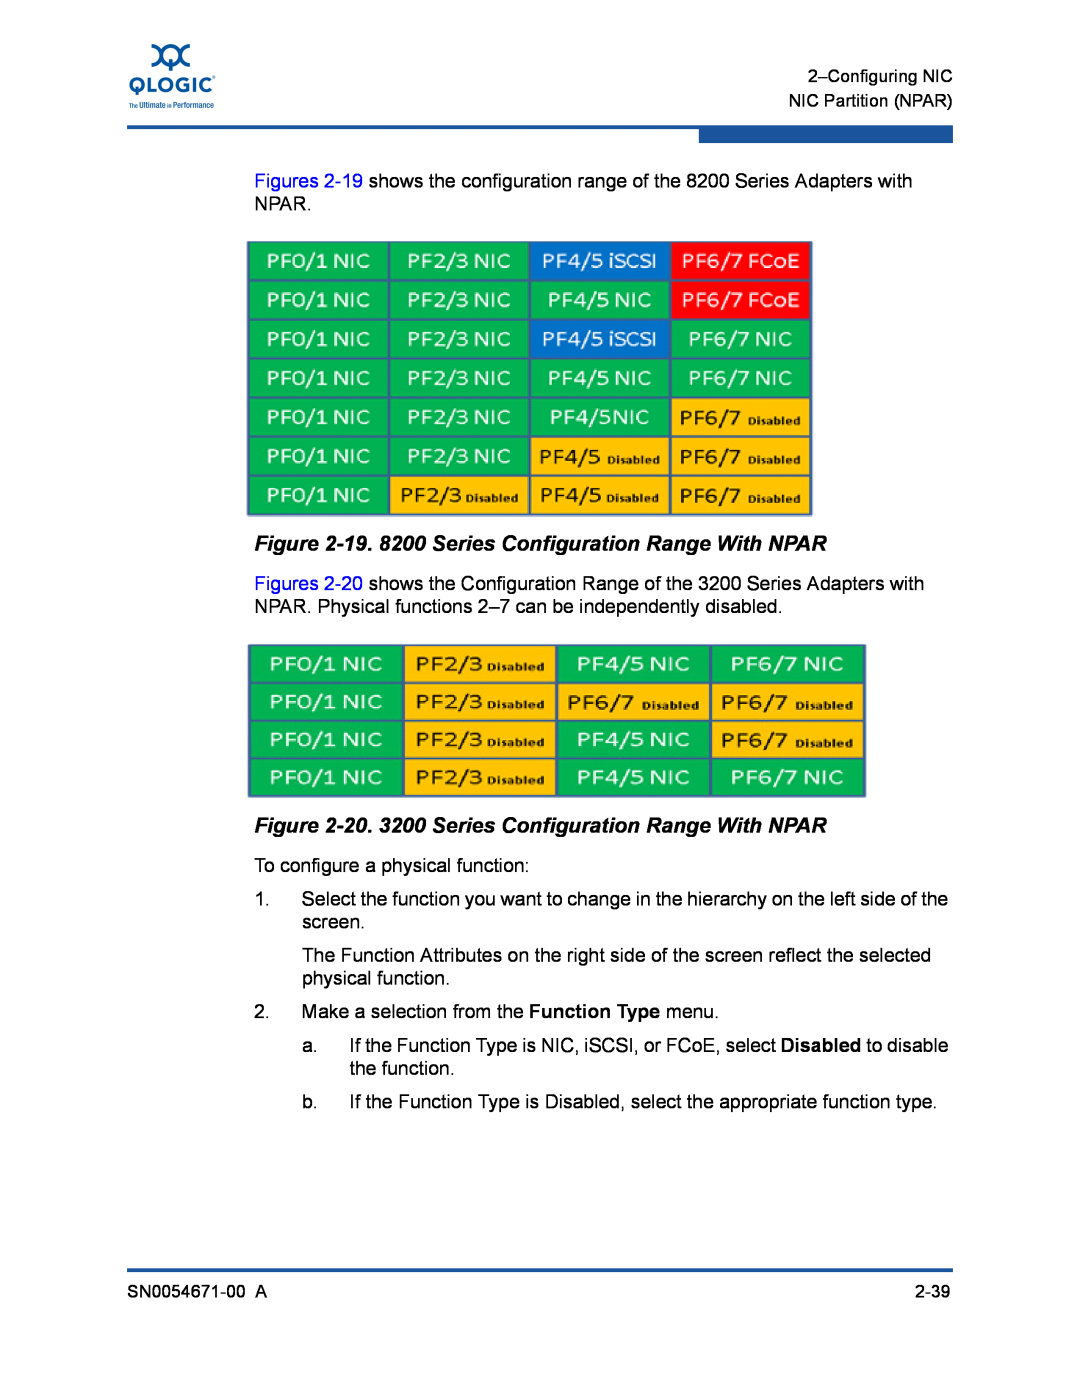 Q-Logic manual 19. 8200 Series Configuration Range With NPAR, 20. 3200 Series Configuration Range With NPAR 